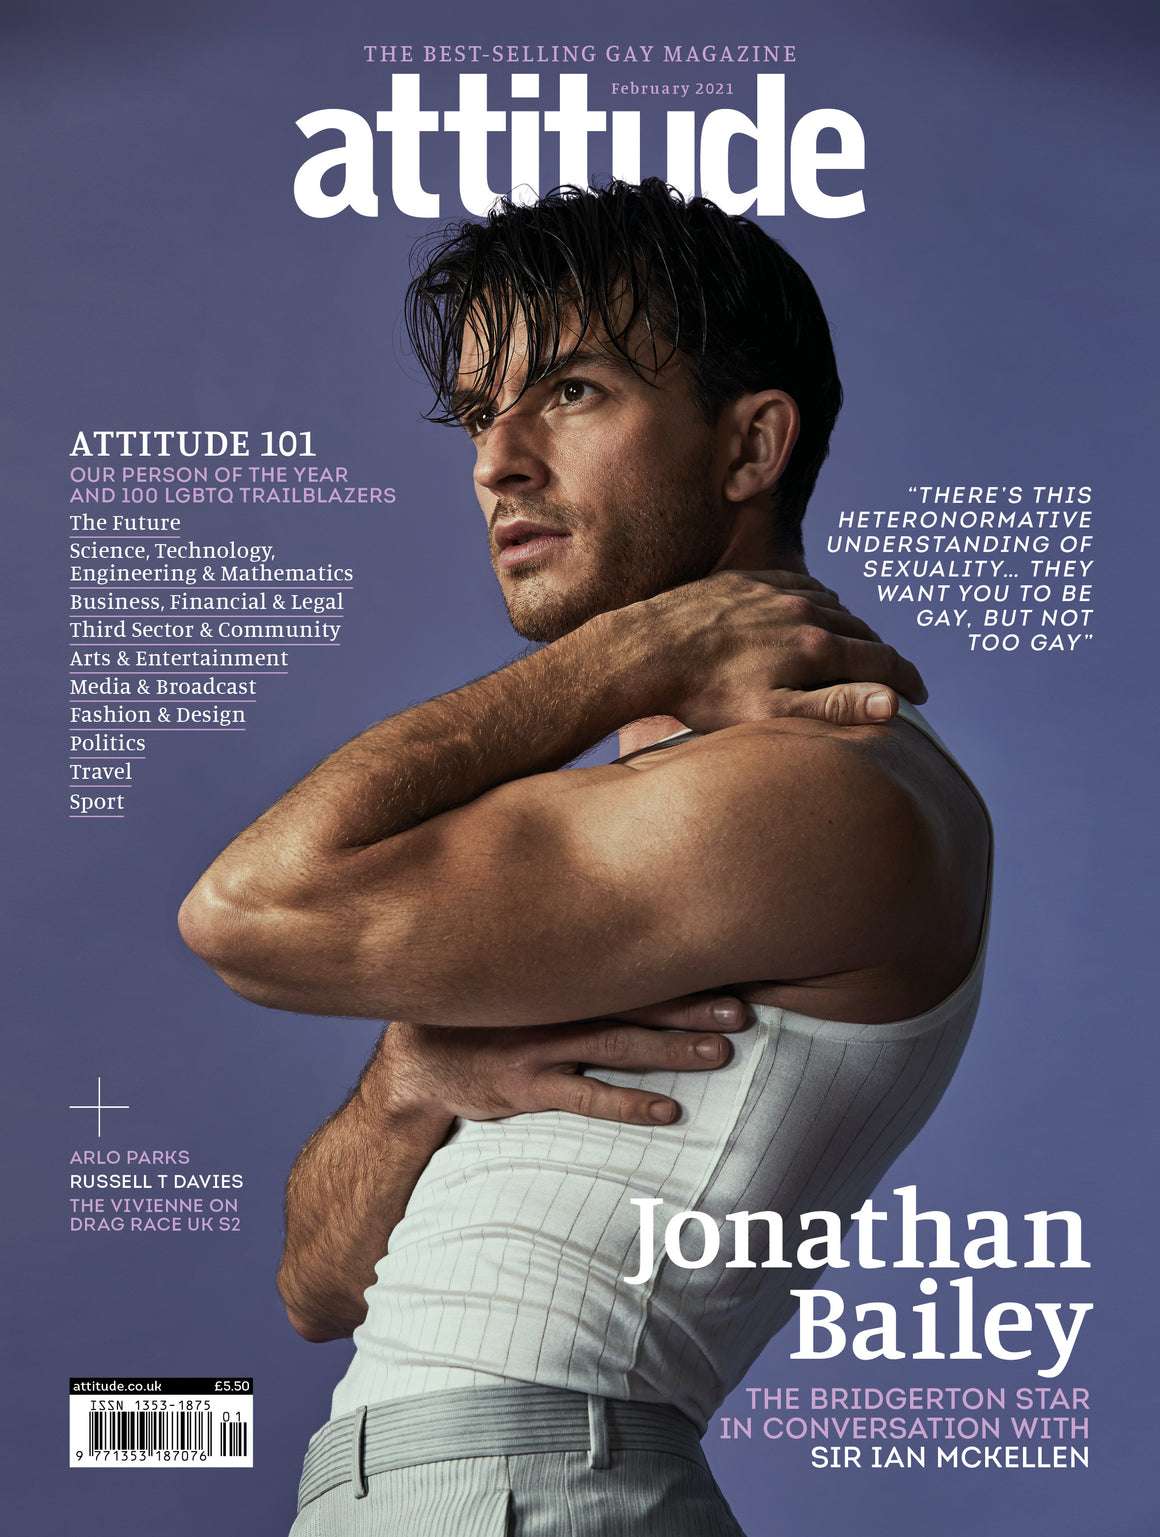 UK Attitude Magazine Feb 2021 #331: JONATHAN BAILEY COVER FEATURE Bridgerton